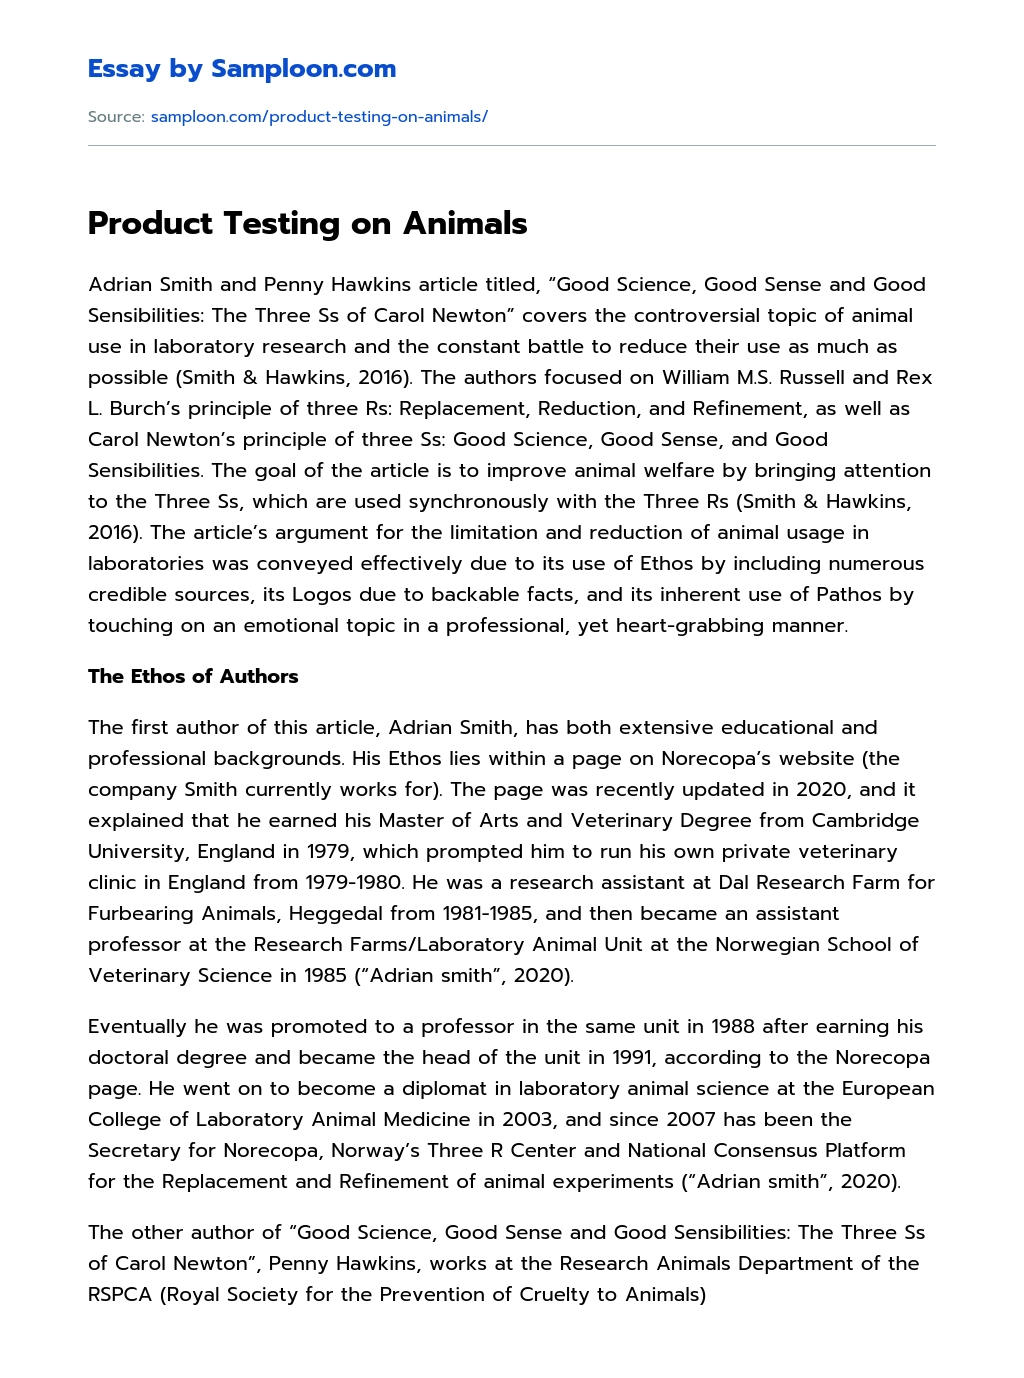 Product Testing on Animals essay